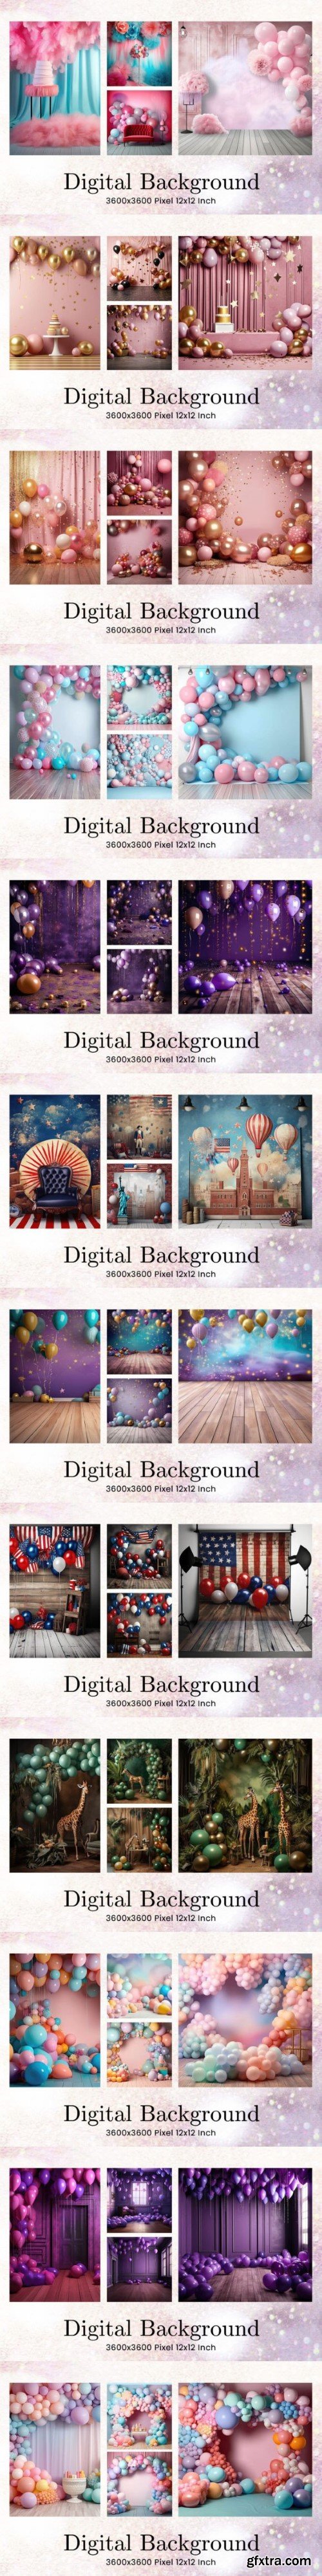 Balloon Party Studio Backdrop Overlays